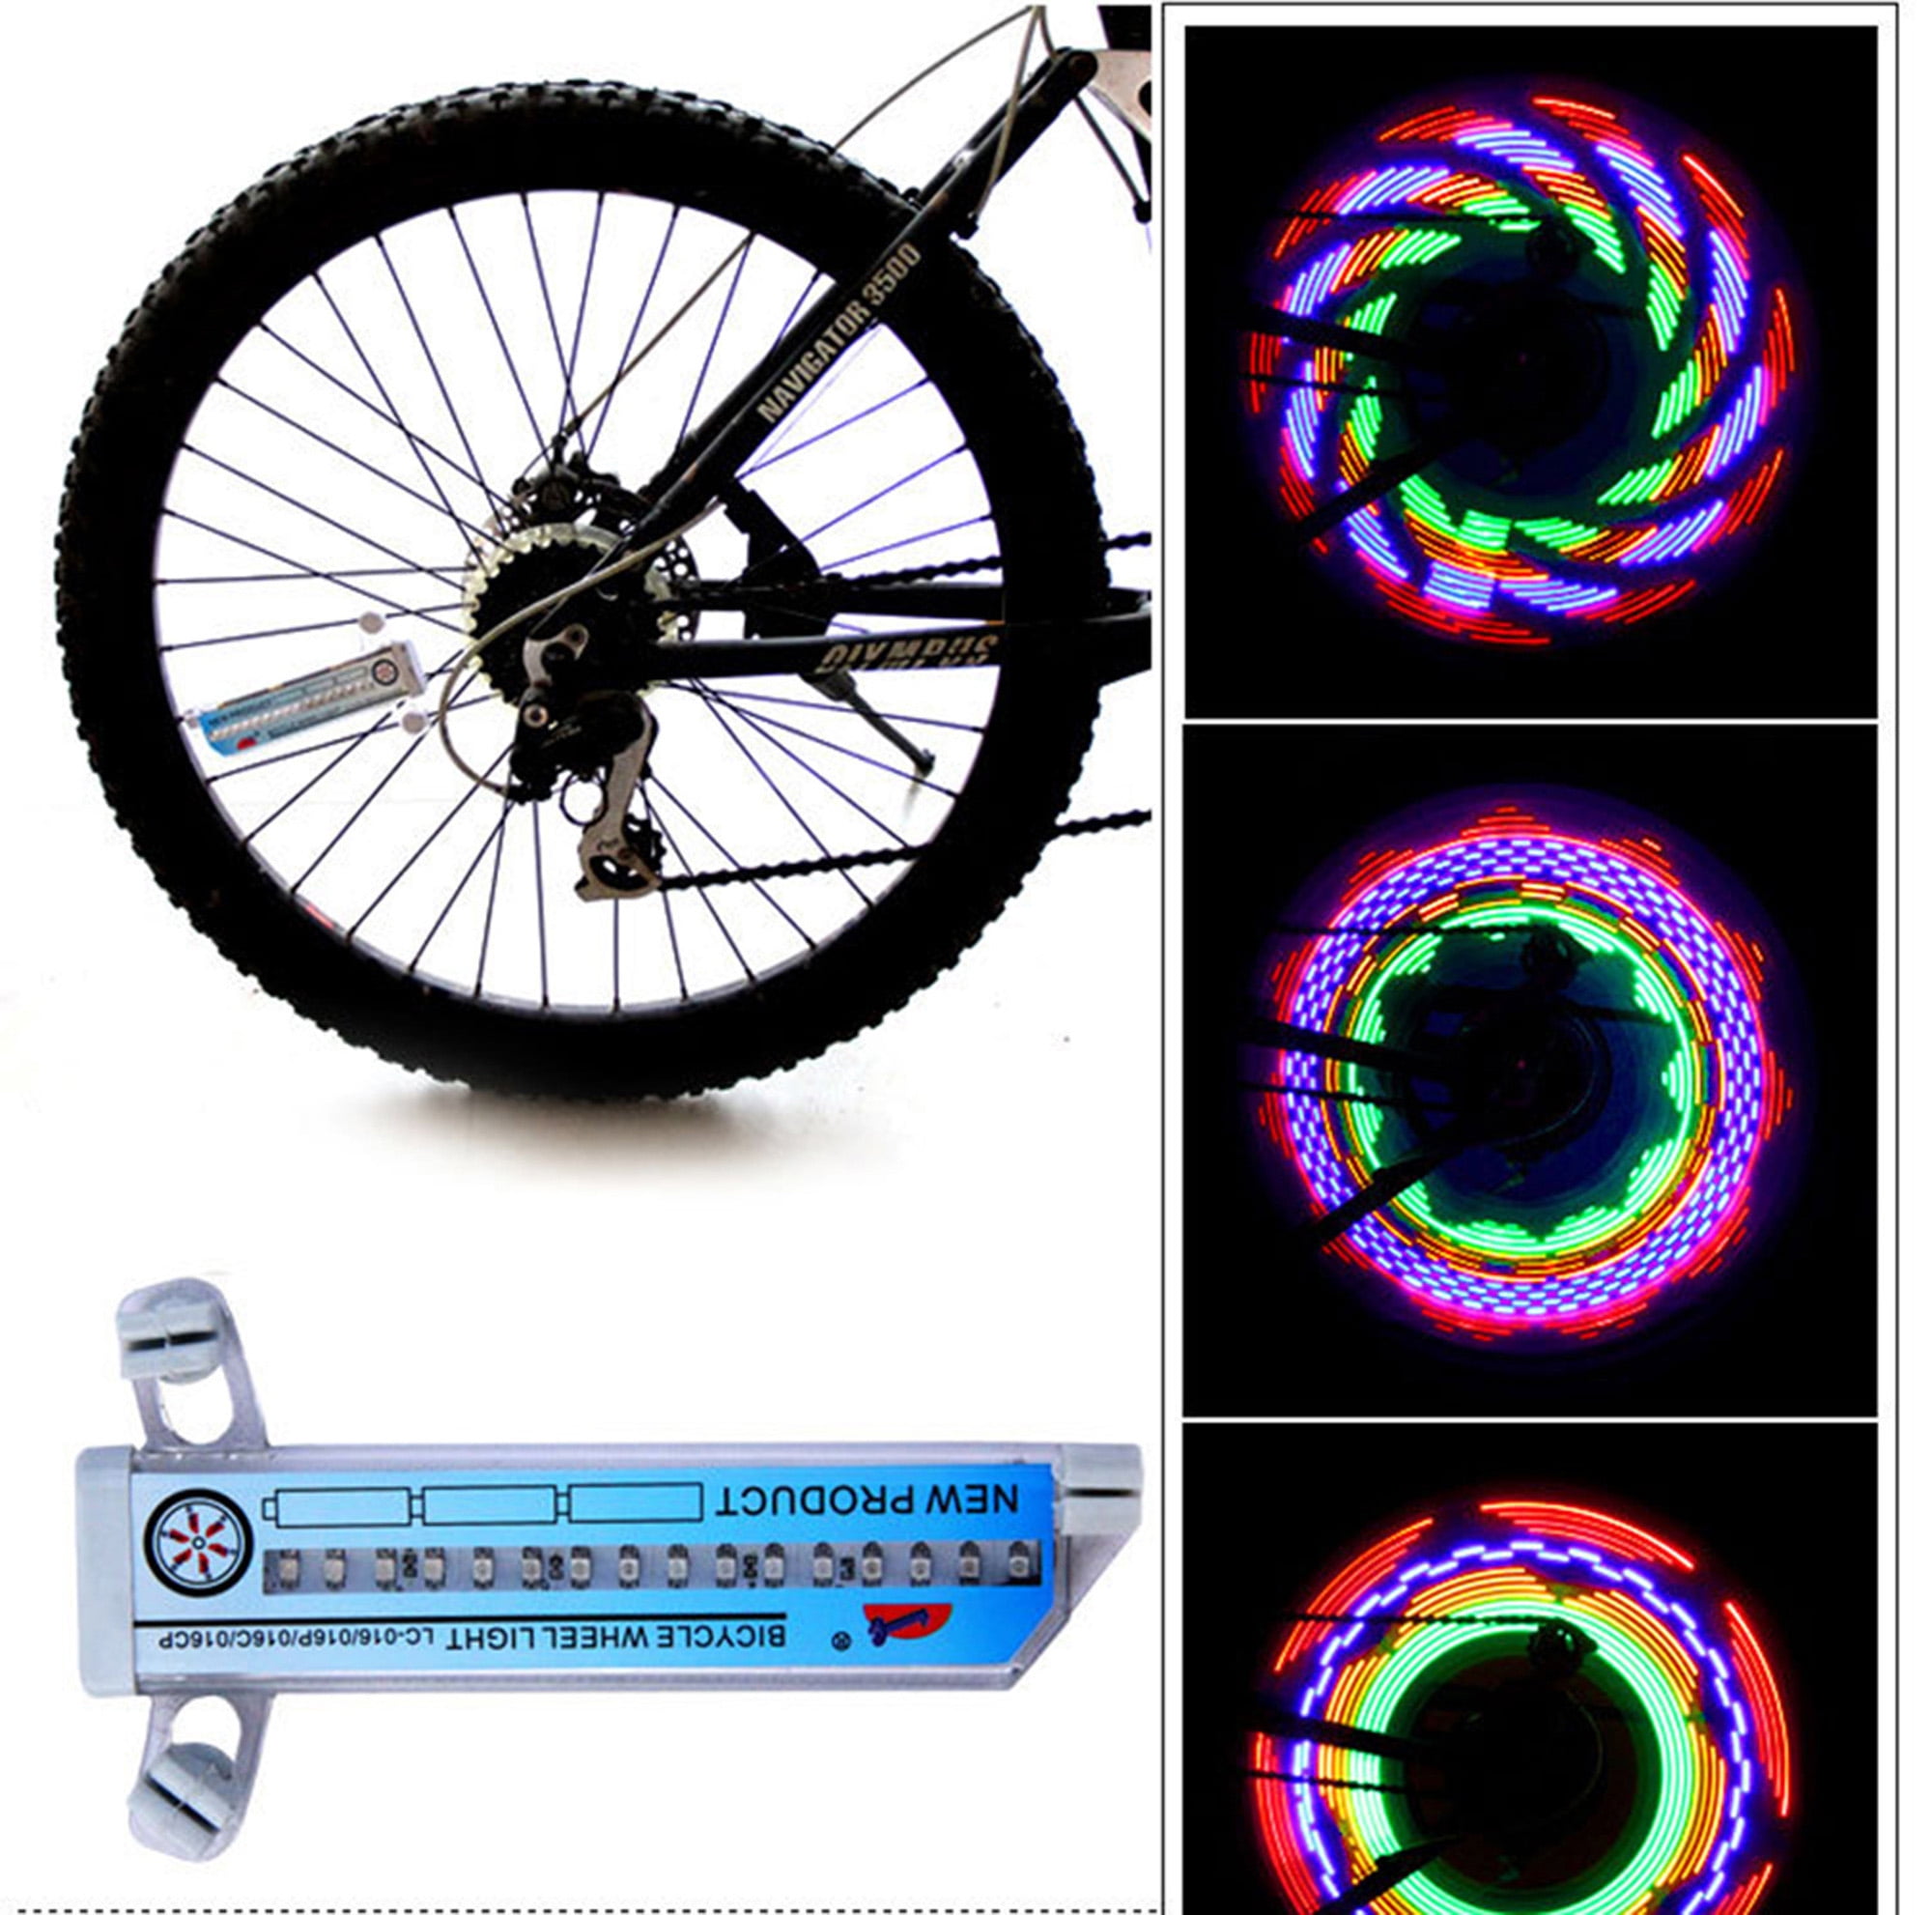 Aubess Bike Wheel Light Spoke IPX6 Waterproof Mountain Bicycle Tire Full Screen Display Lamp 64 LED USB Rechargeable DIY Programmable